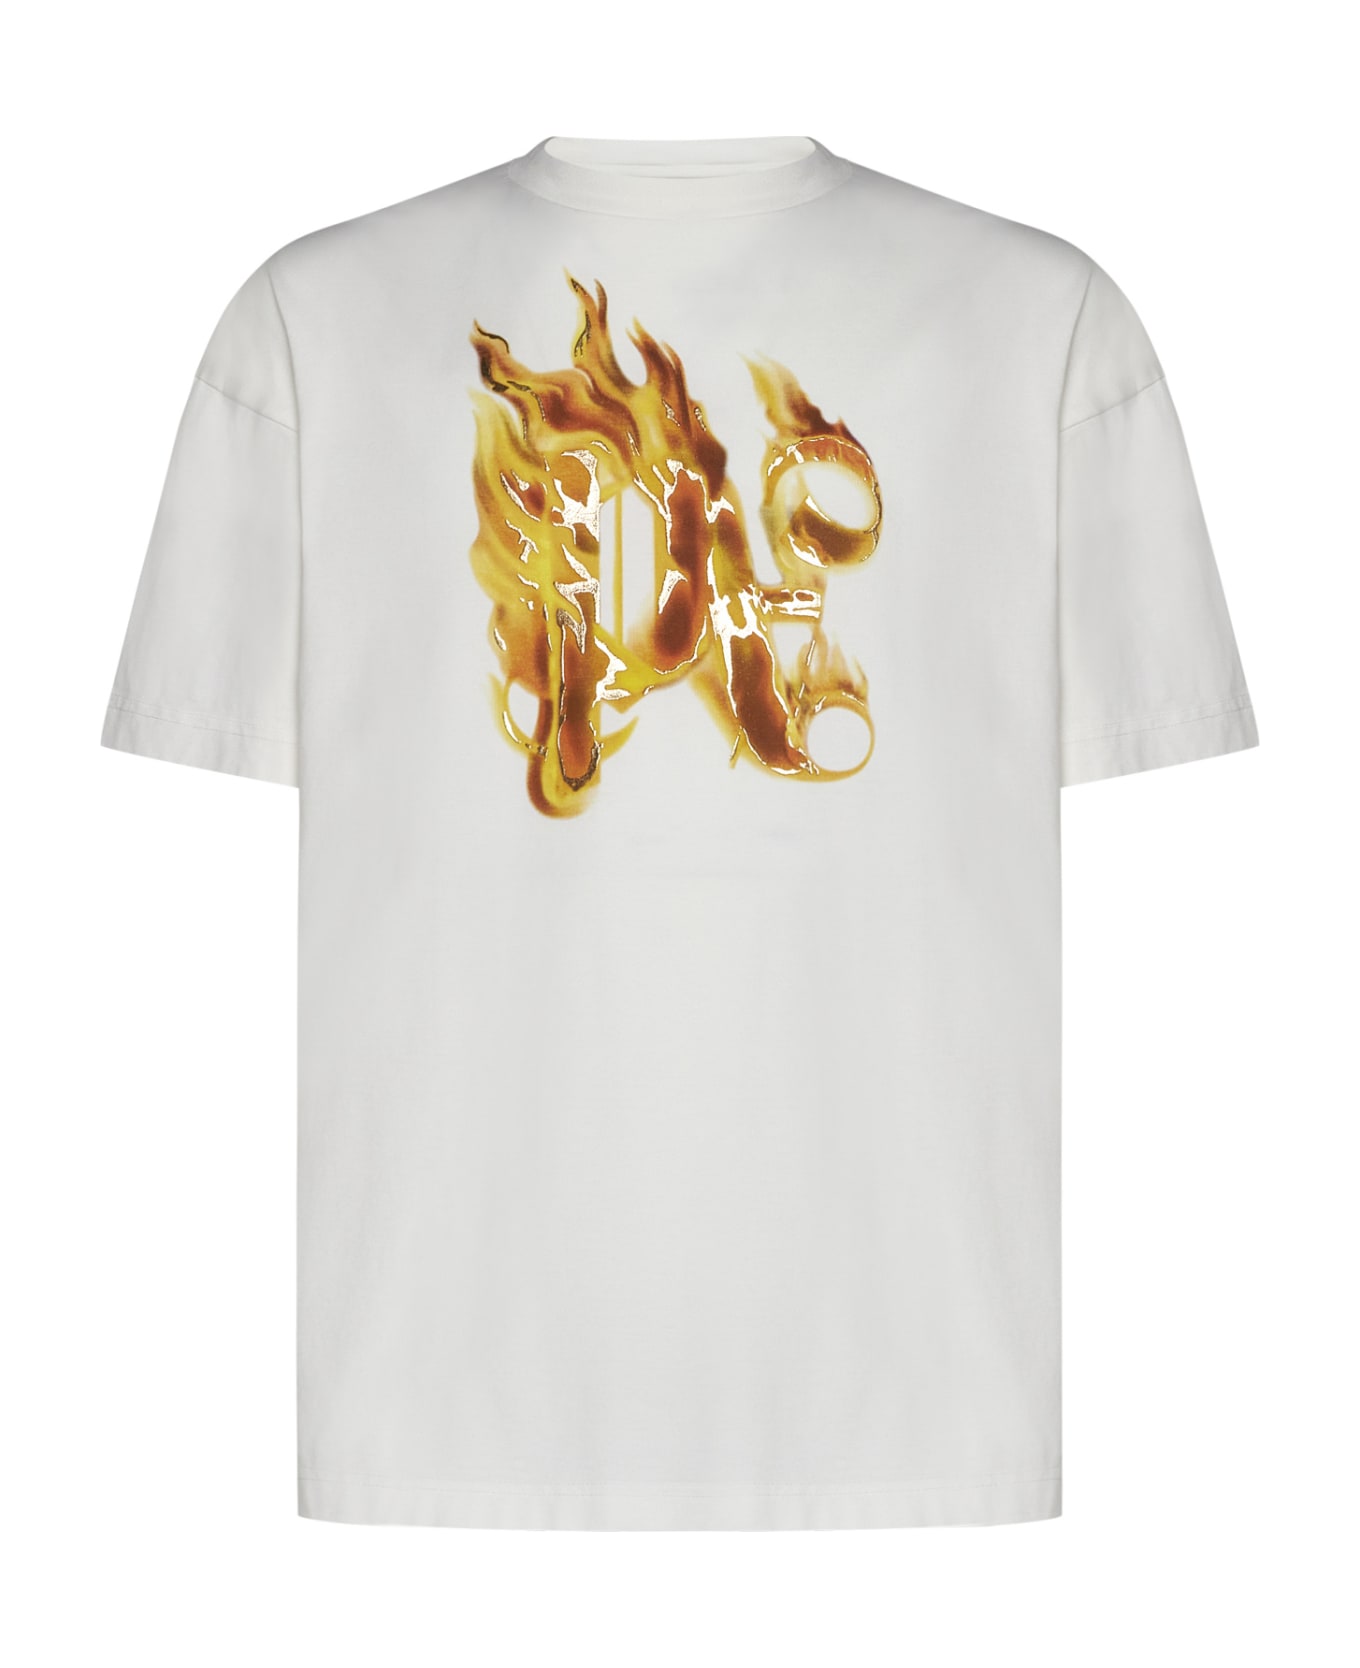 Palm Angels Burning Monogram T-shirt - Off white gold シャツ